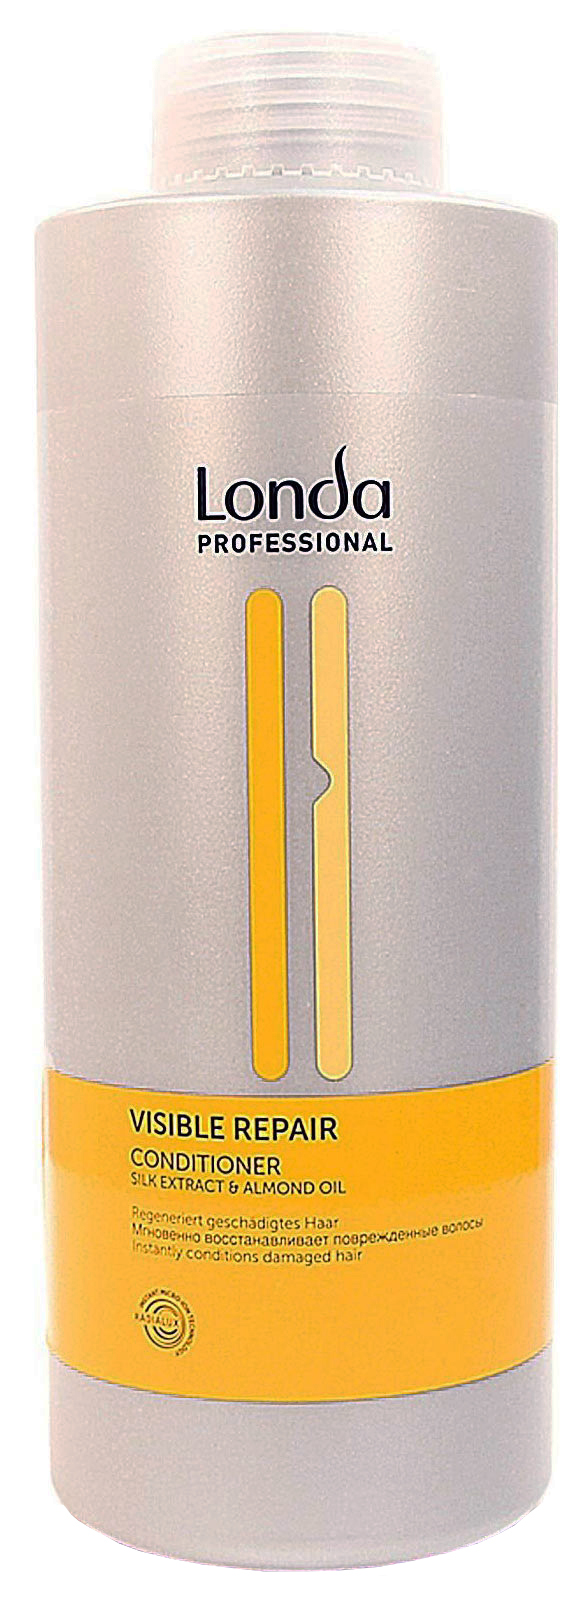 Кондиционер для волос Londa Professional Visible Repair 1000 мл кондиционер для волос londa deep moisture conditioner 1000 мл